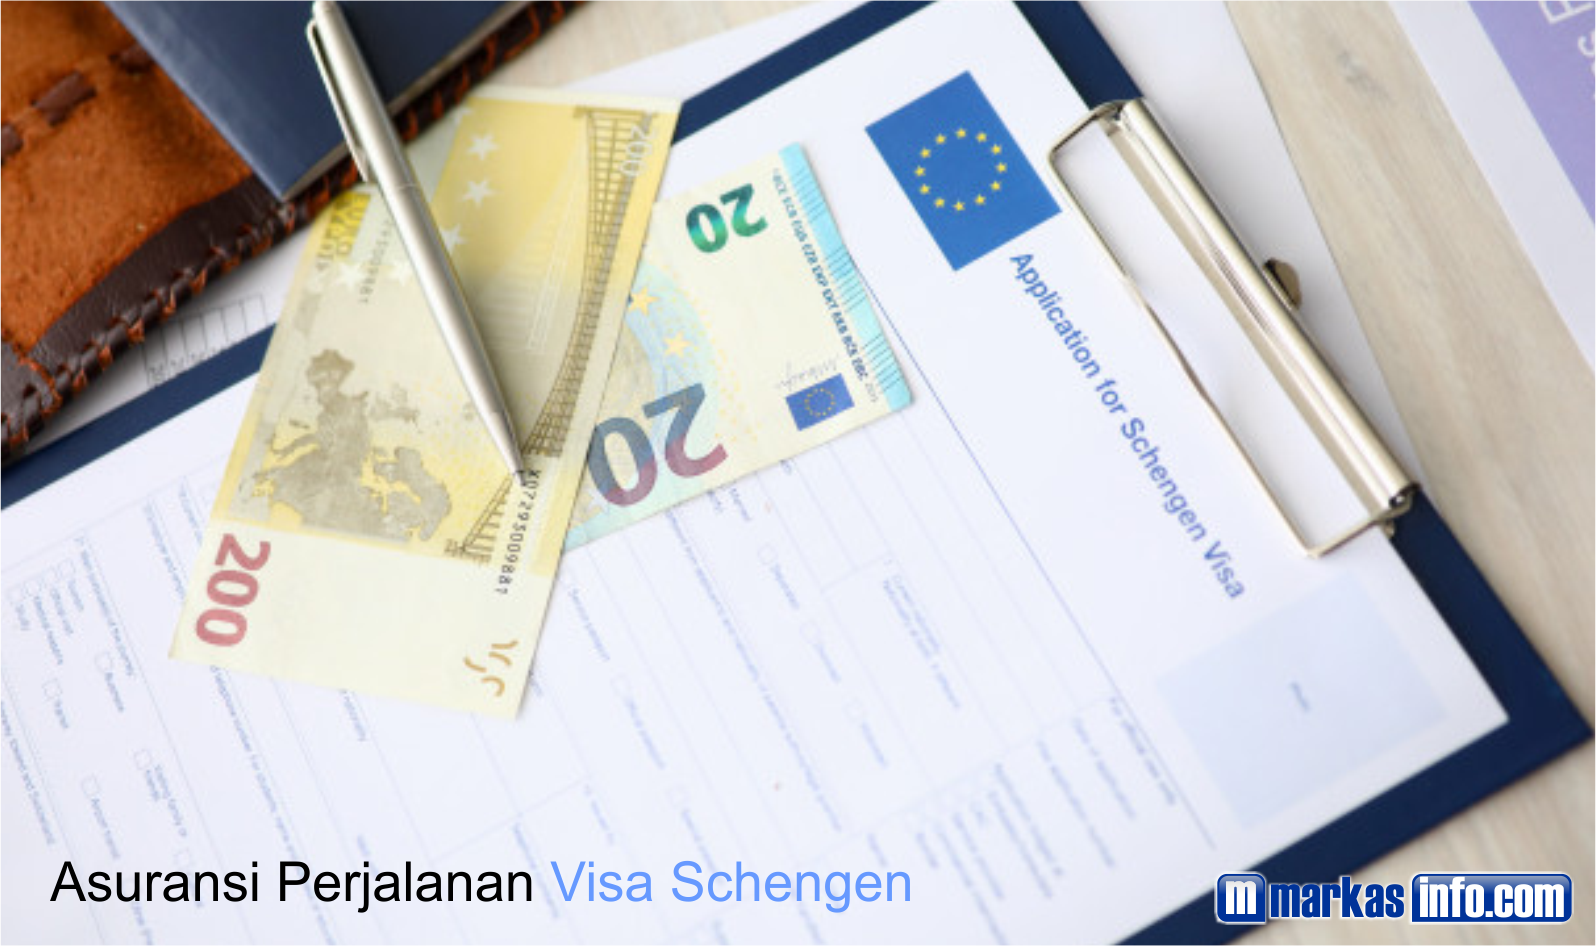 Penjelasan tentang Asuransi Perjalanan Visa Schengen Markas Info